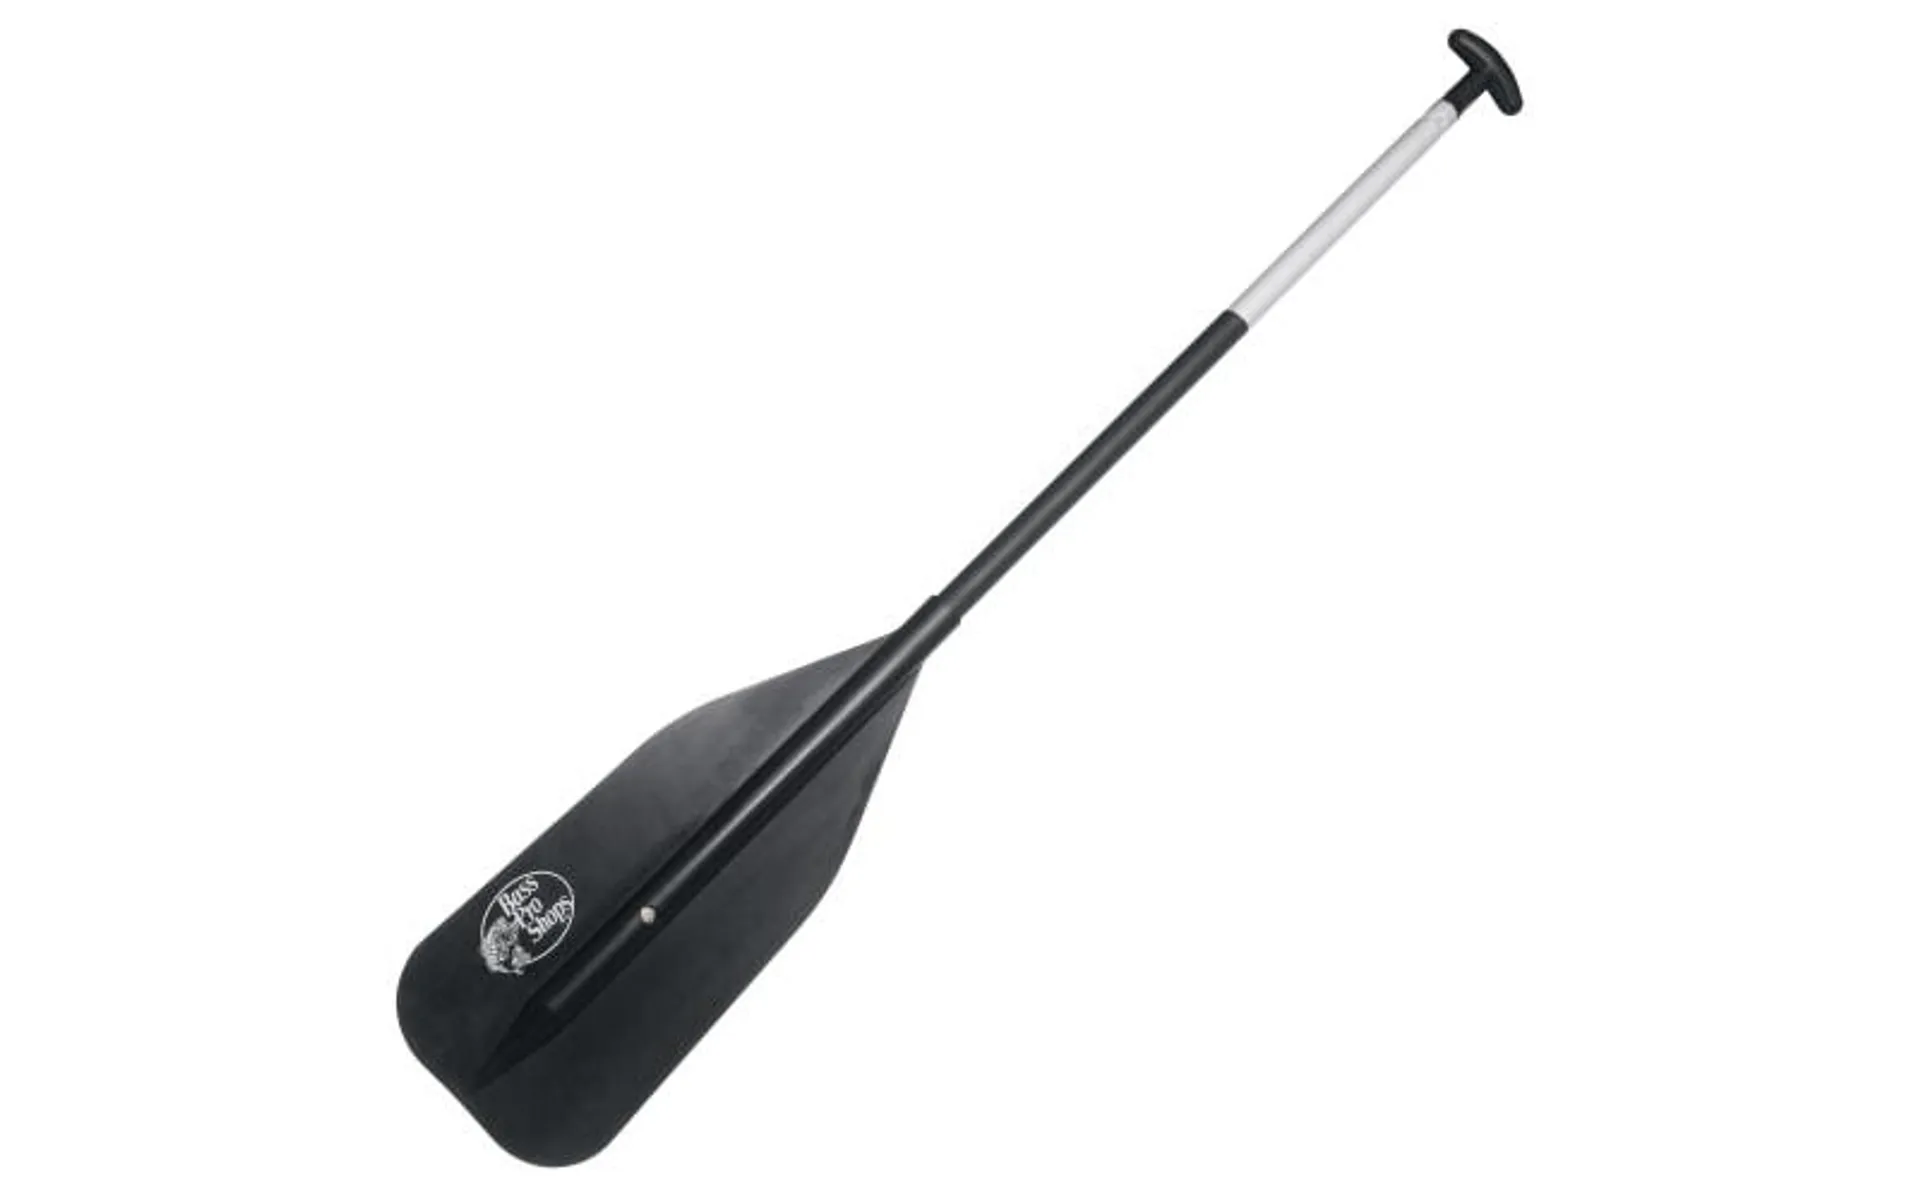 Bass Pro Shops T-grip Canoe Paddle